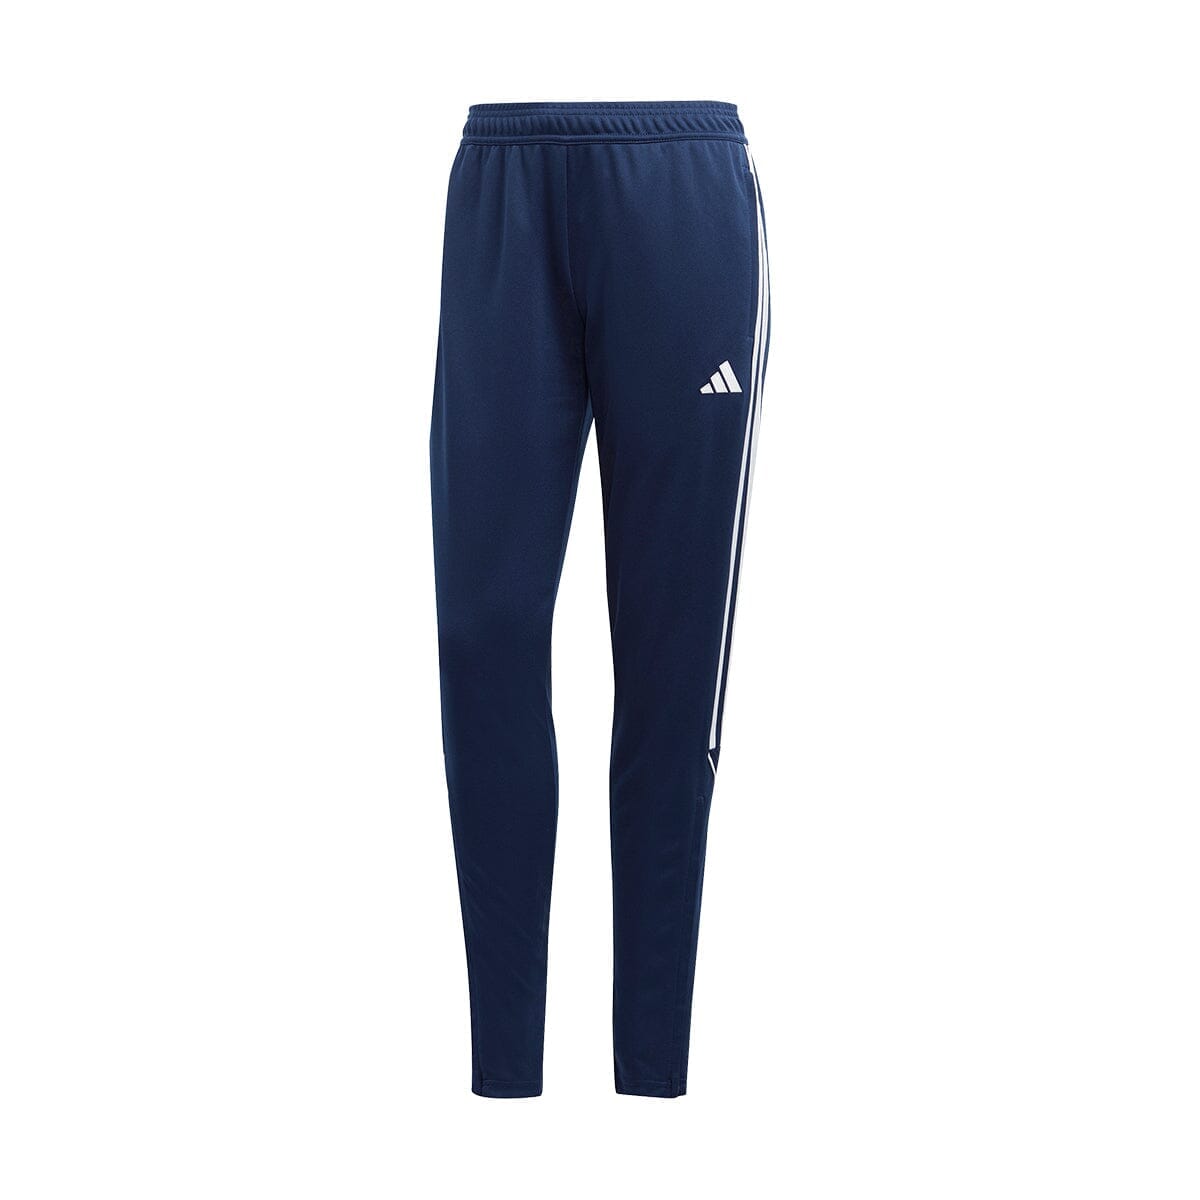 Adidas Soccer Pants | Tiro and Condivo